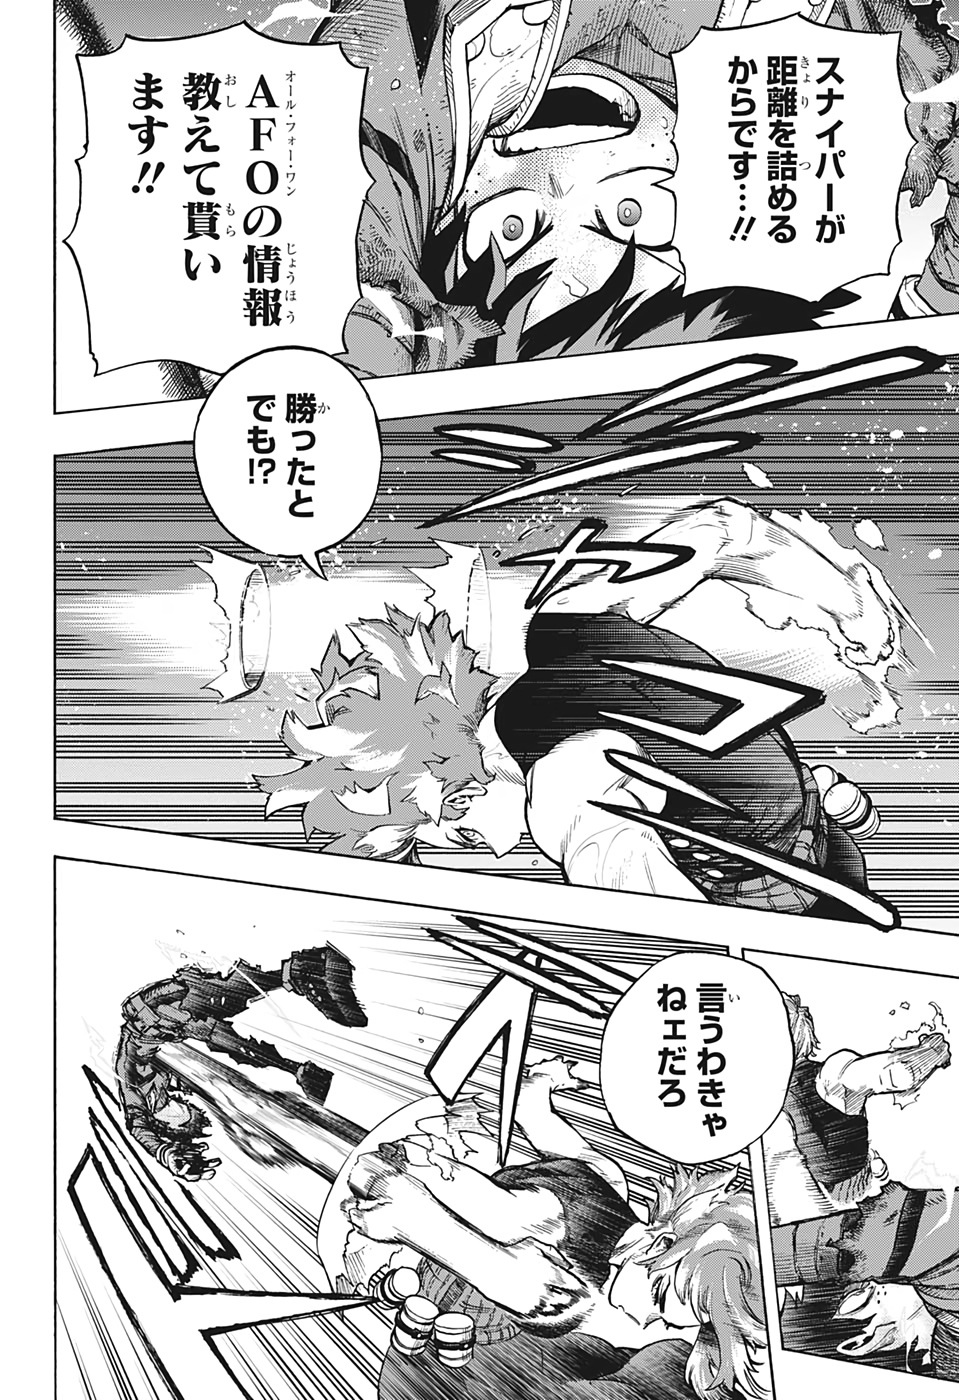 Boku no Hero Academia - Chapter 314 - Page 2